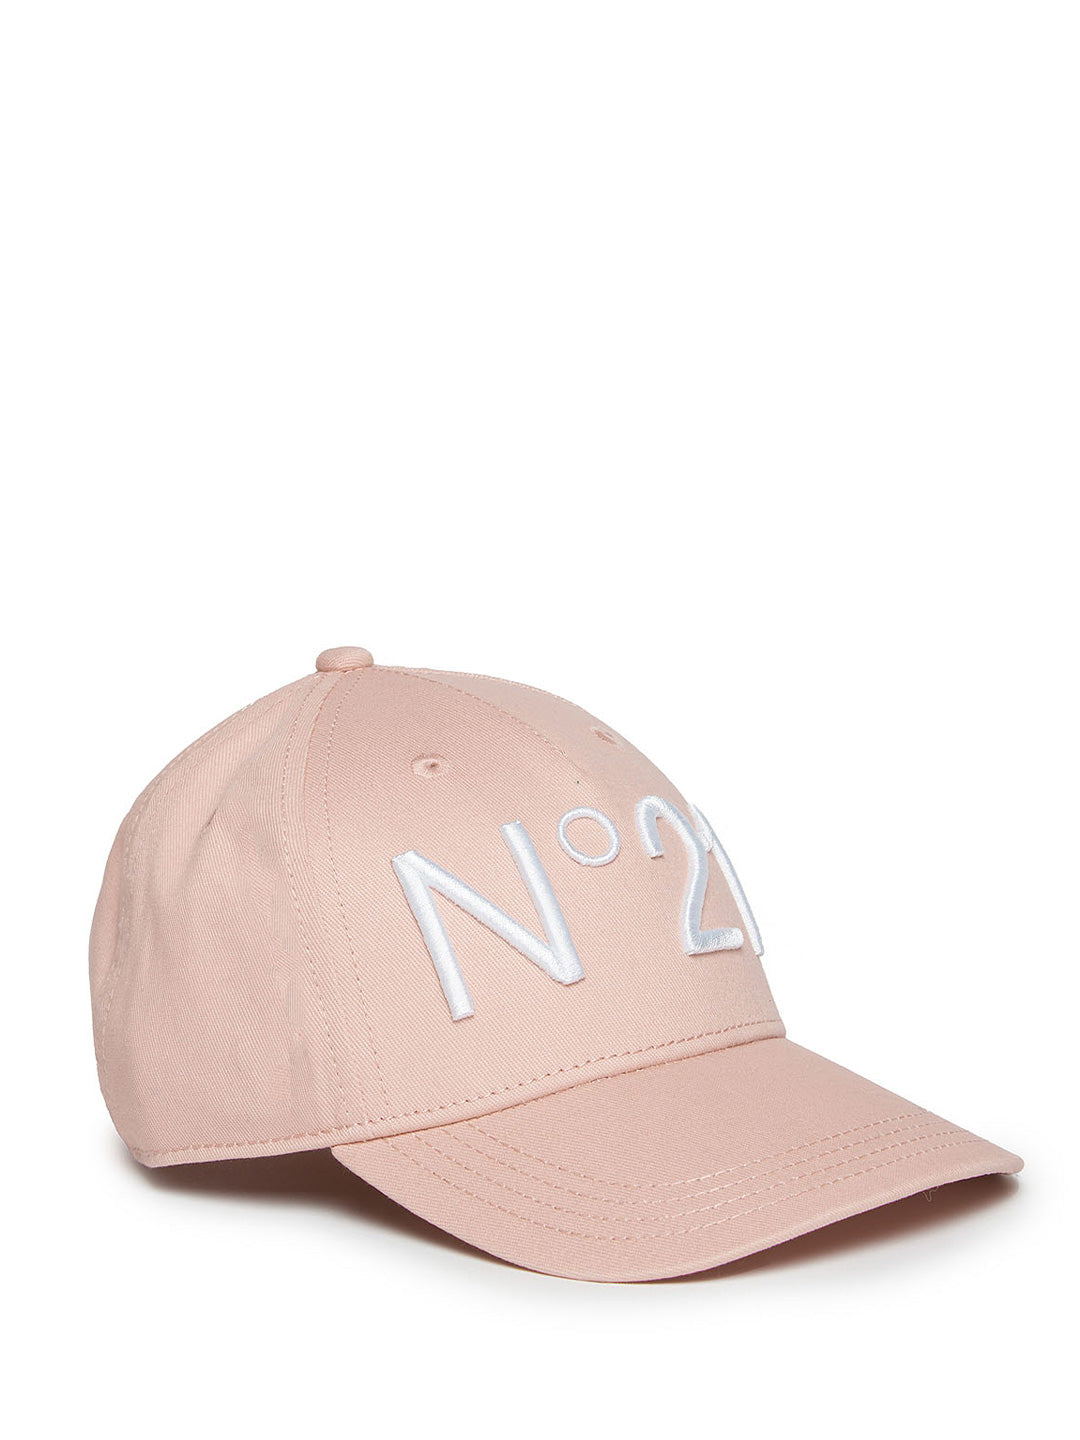 N°21 cappello kids rosa con logo in contrasto